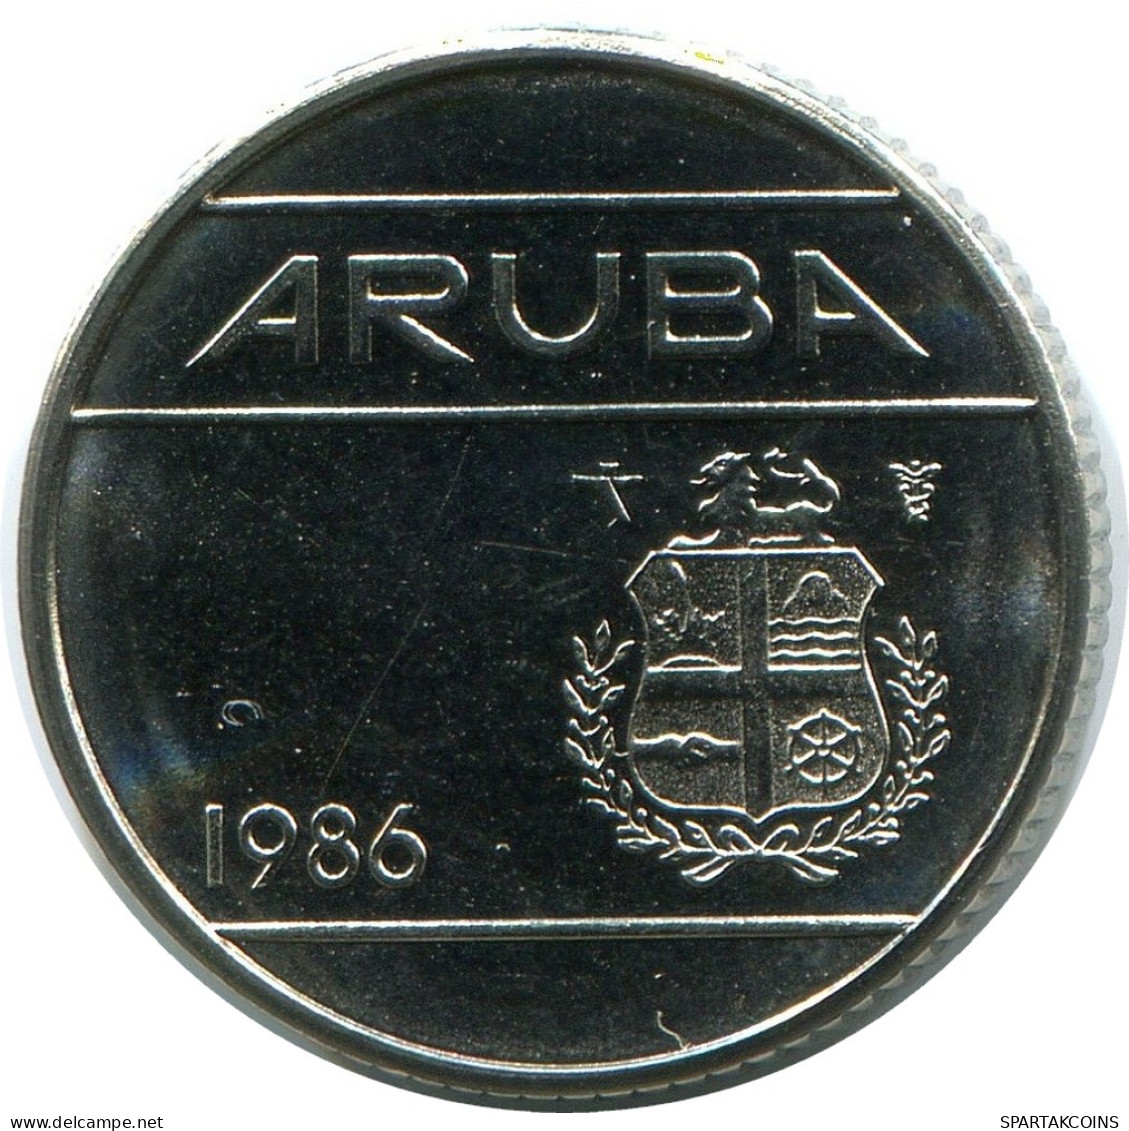 10 CENTS 1986 ARUBA Coin (From BU Mint Set) #AH076.U - Aruba